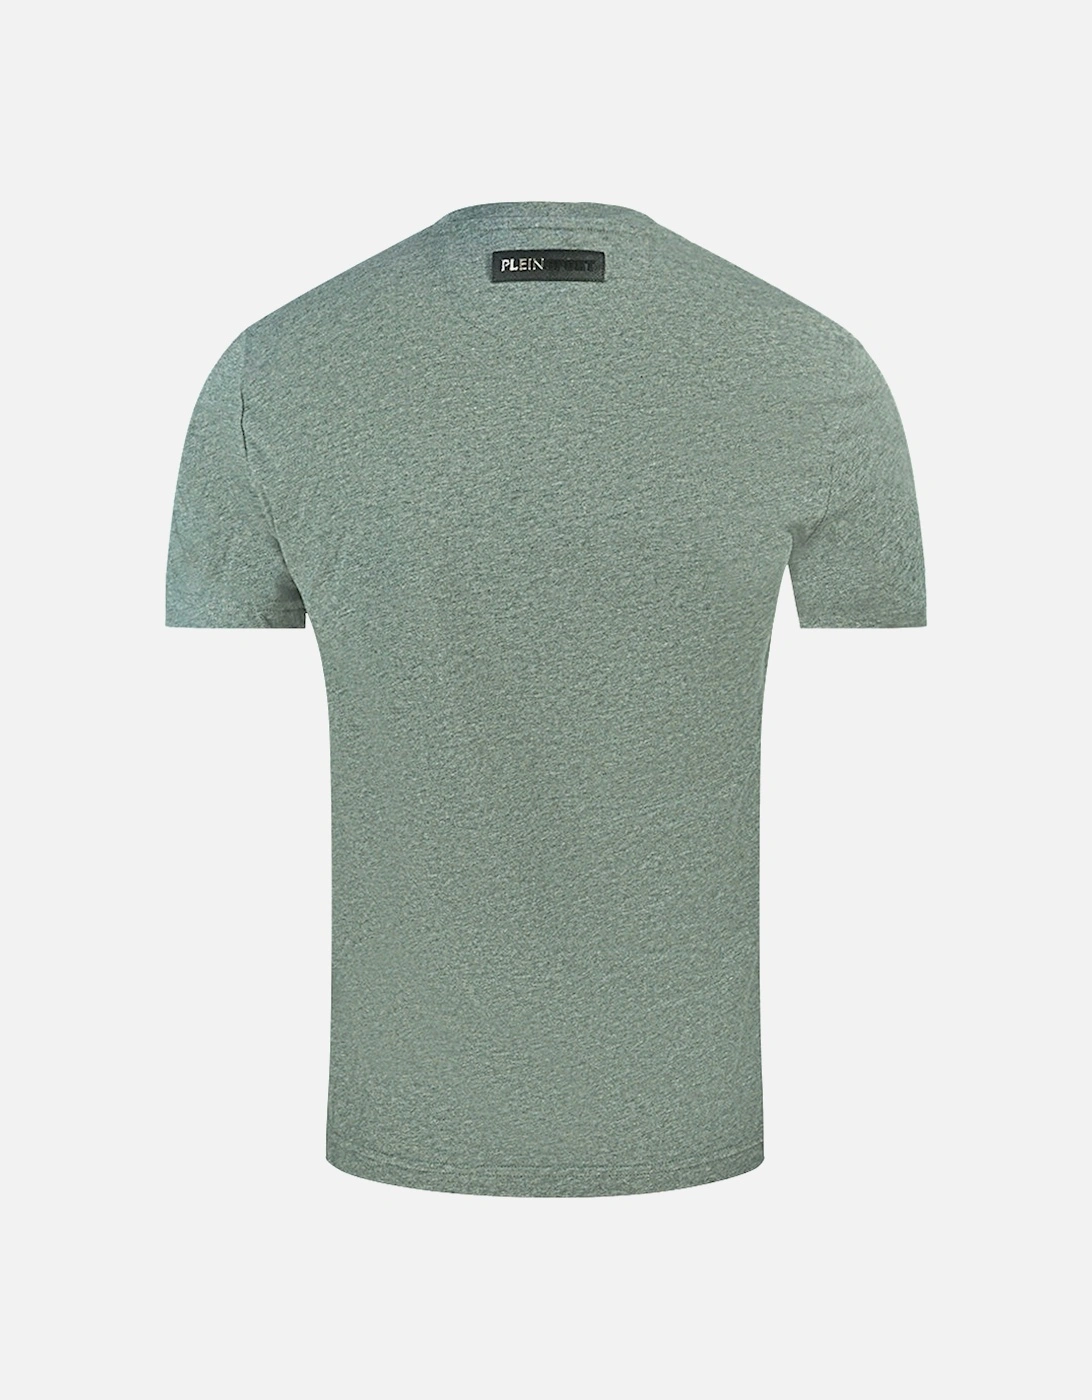 Plein Sport Scribble Layer Logo Grey T-Shirt